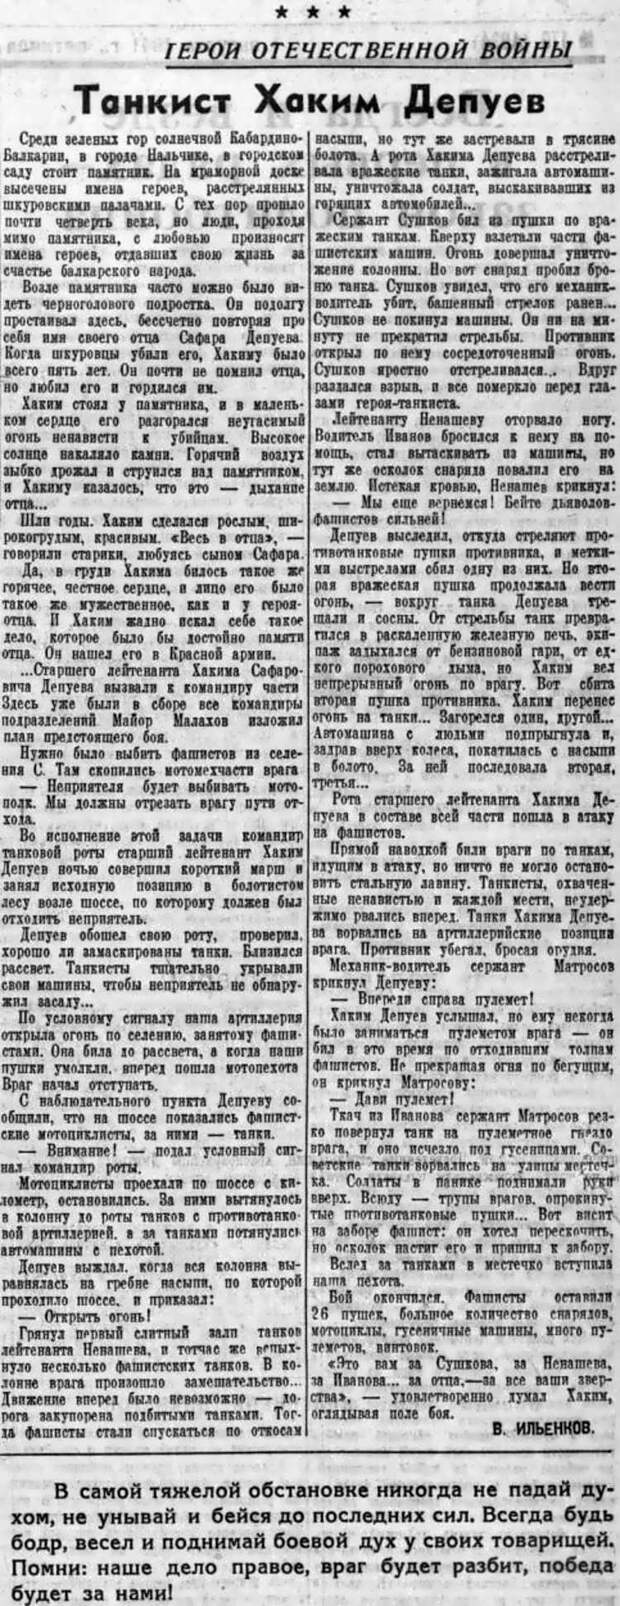 Танкист Хаким Депуев (1 августа 1941 года «Красная звезда ...